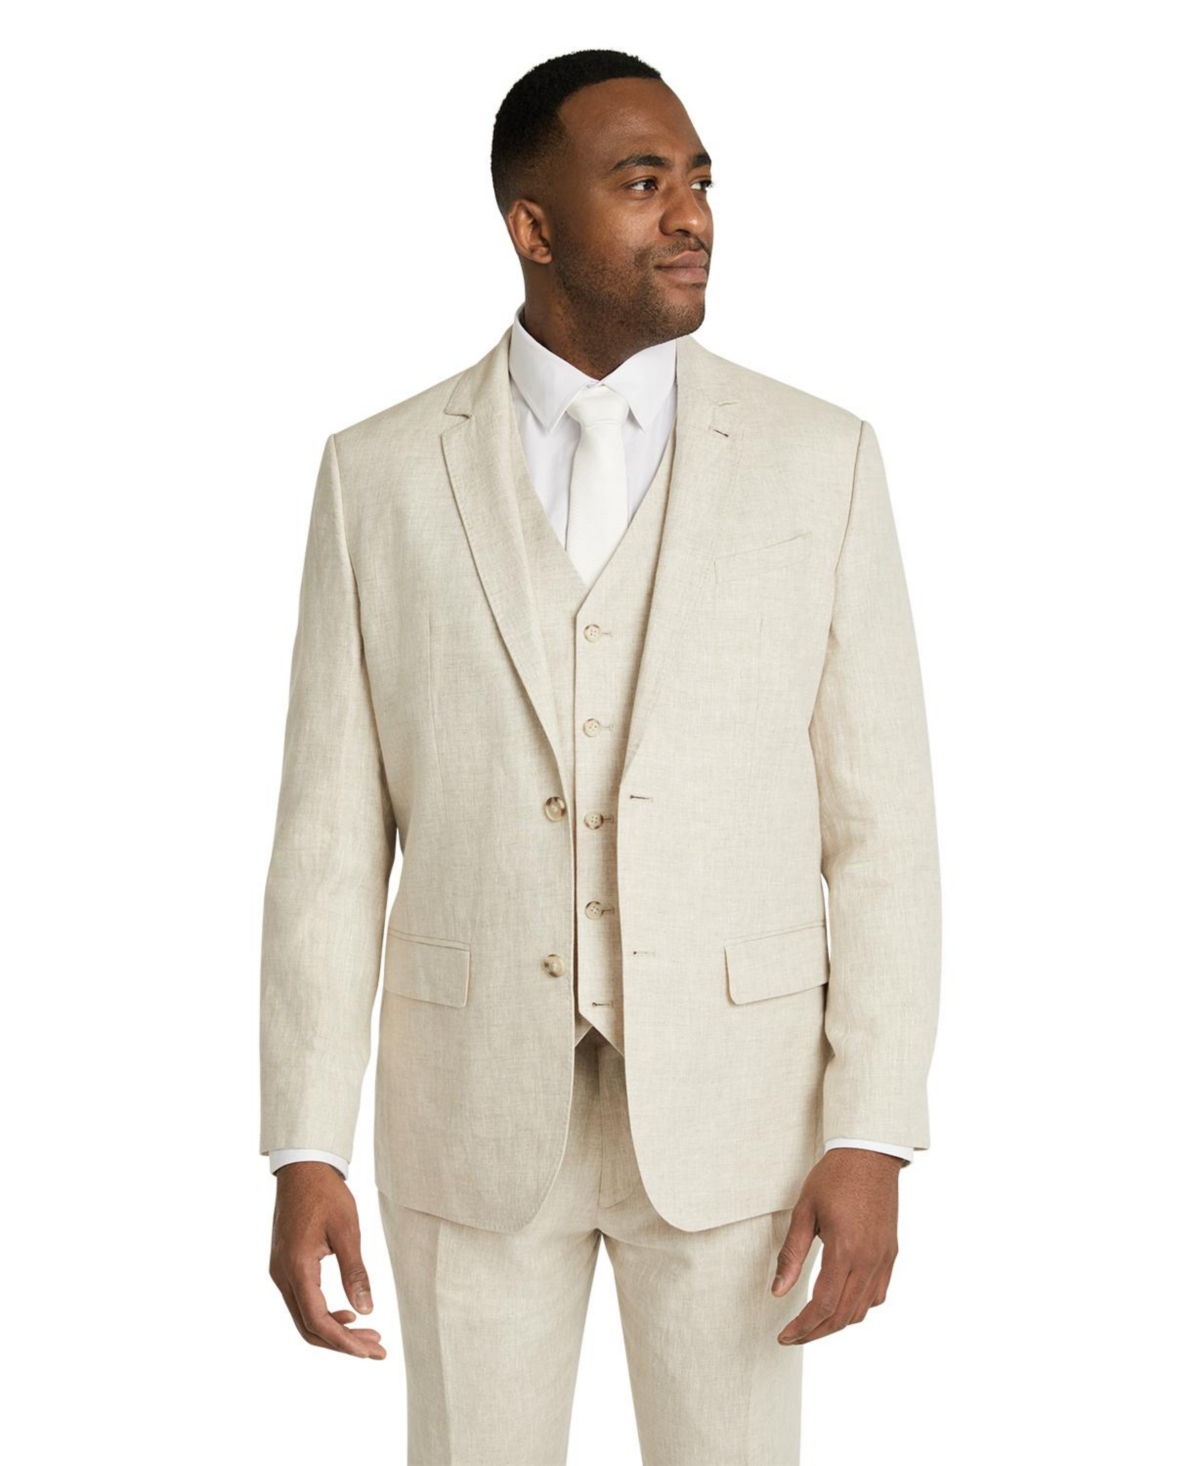 Johnny Big Men's Hems worth Linen Suit Jacket - Natural